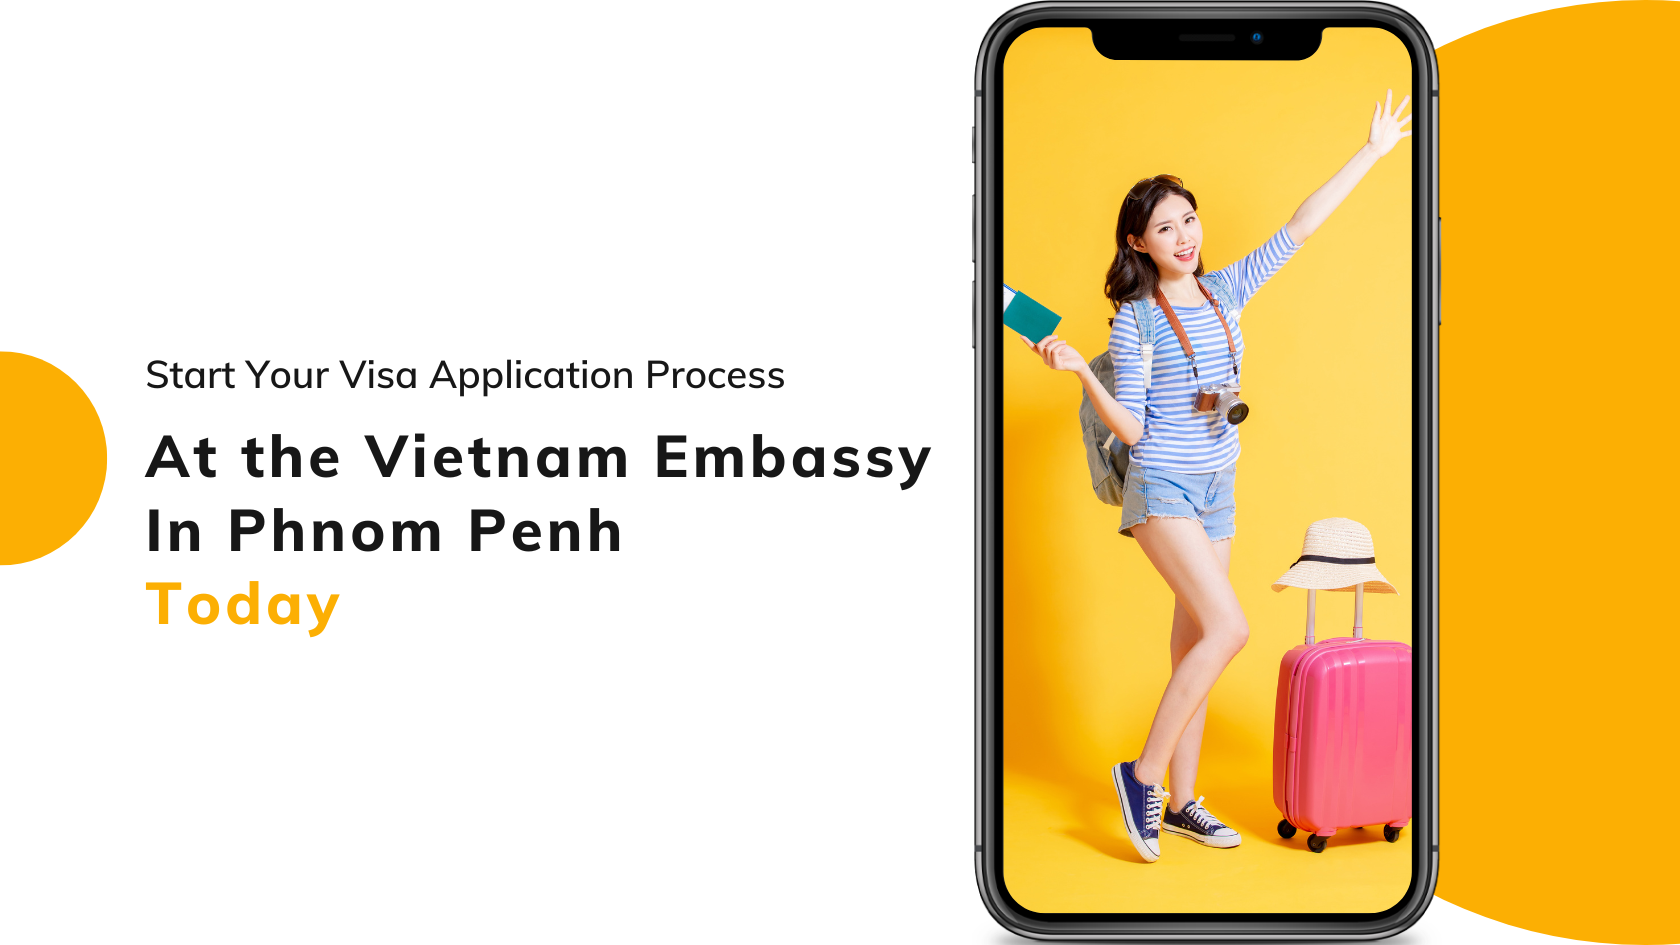 Start Your Visa Application Process at the Vietnam Embassy in Phnom Penh!